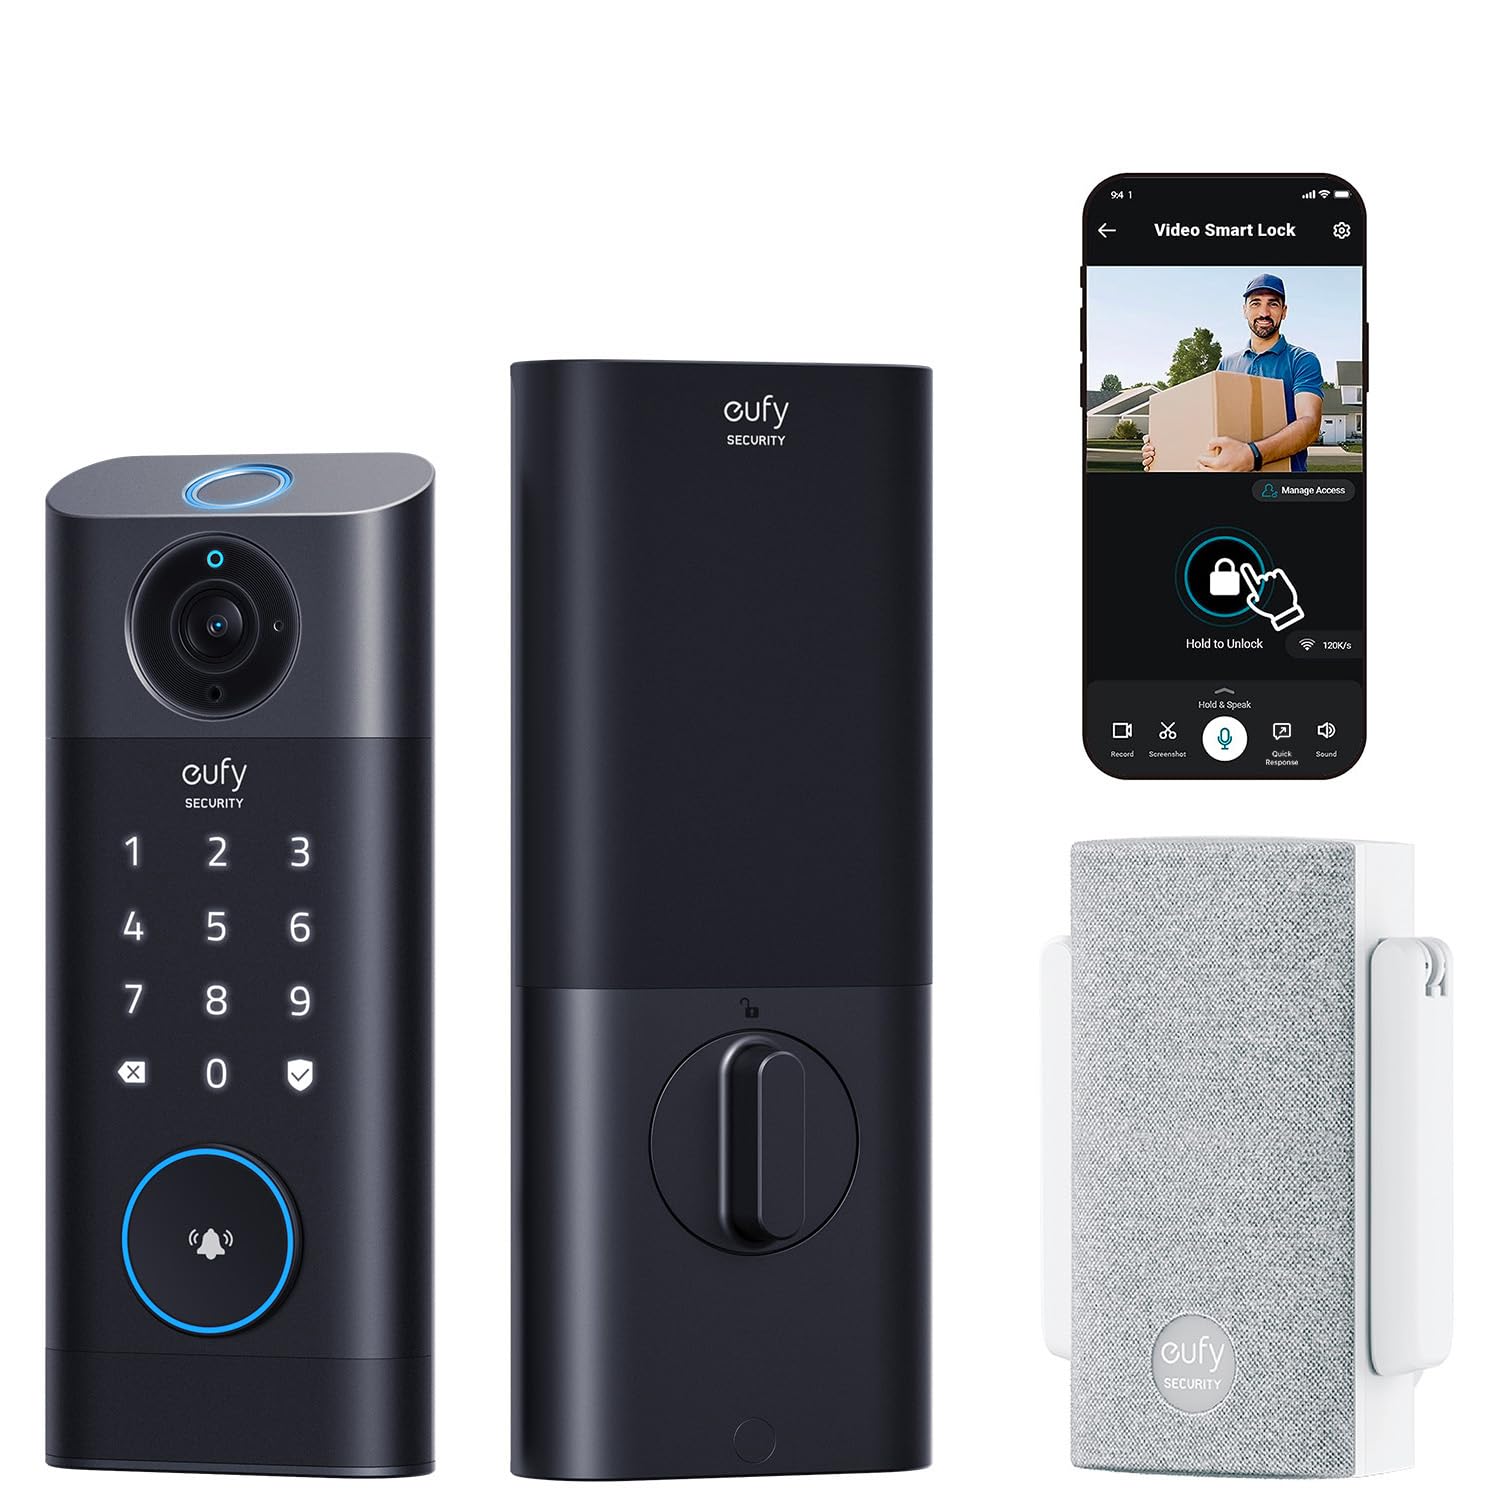  eufy security Security Video Smart Lock S330, Chime Included, 3-in-1 Camera+Doorbell+Fingerprint Keyless Entry,BHMA, WiFi Door Lock,App Remote Control,2K HD,Doorbell Camera,No Monthly Fee,SD Card...